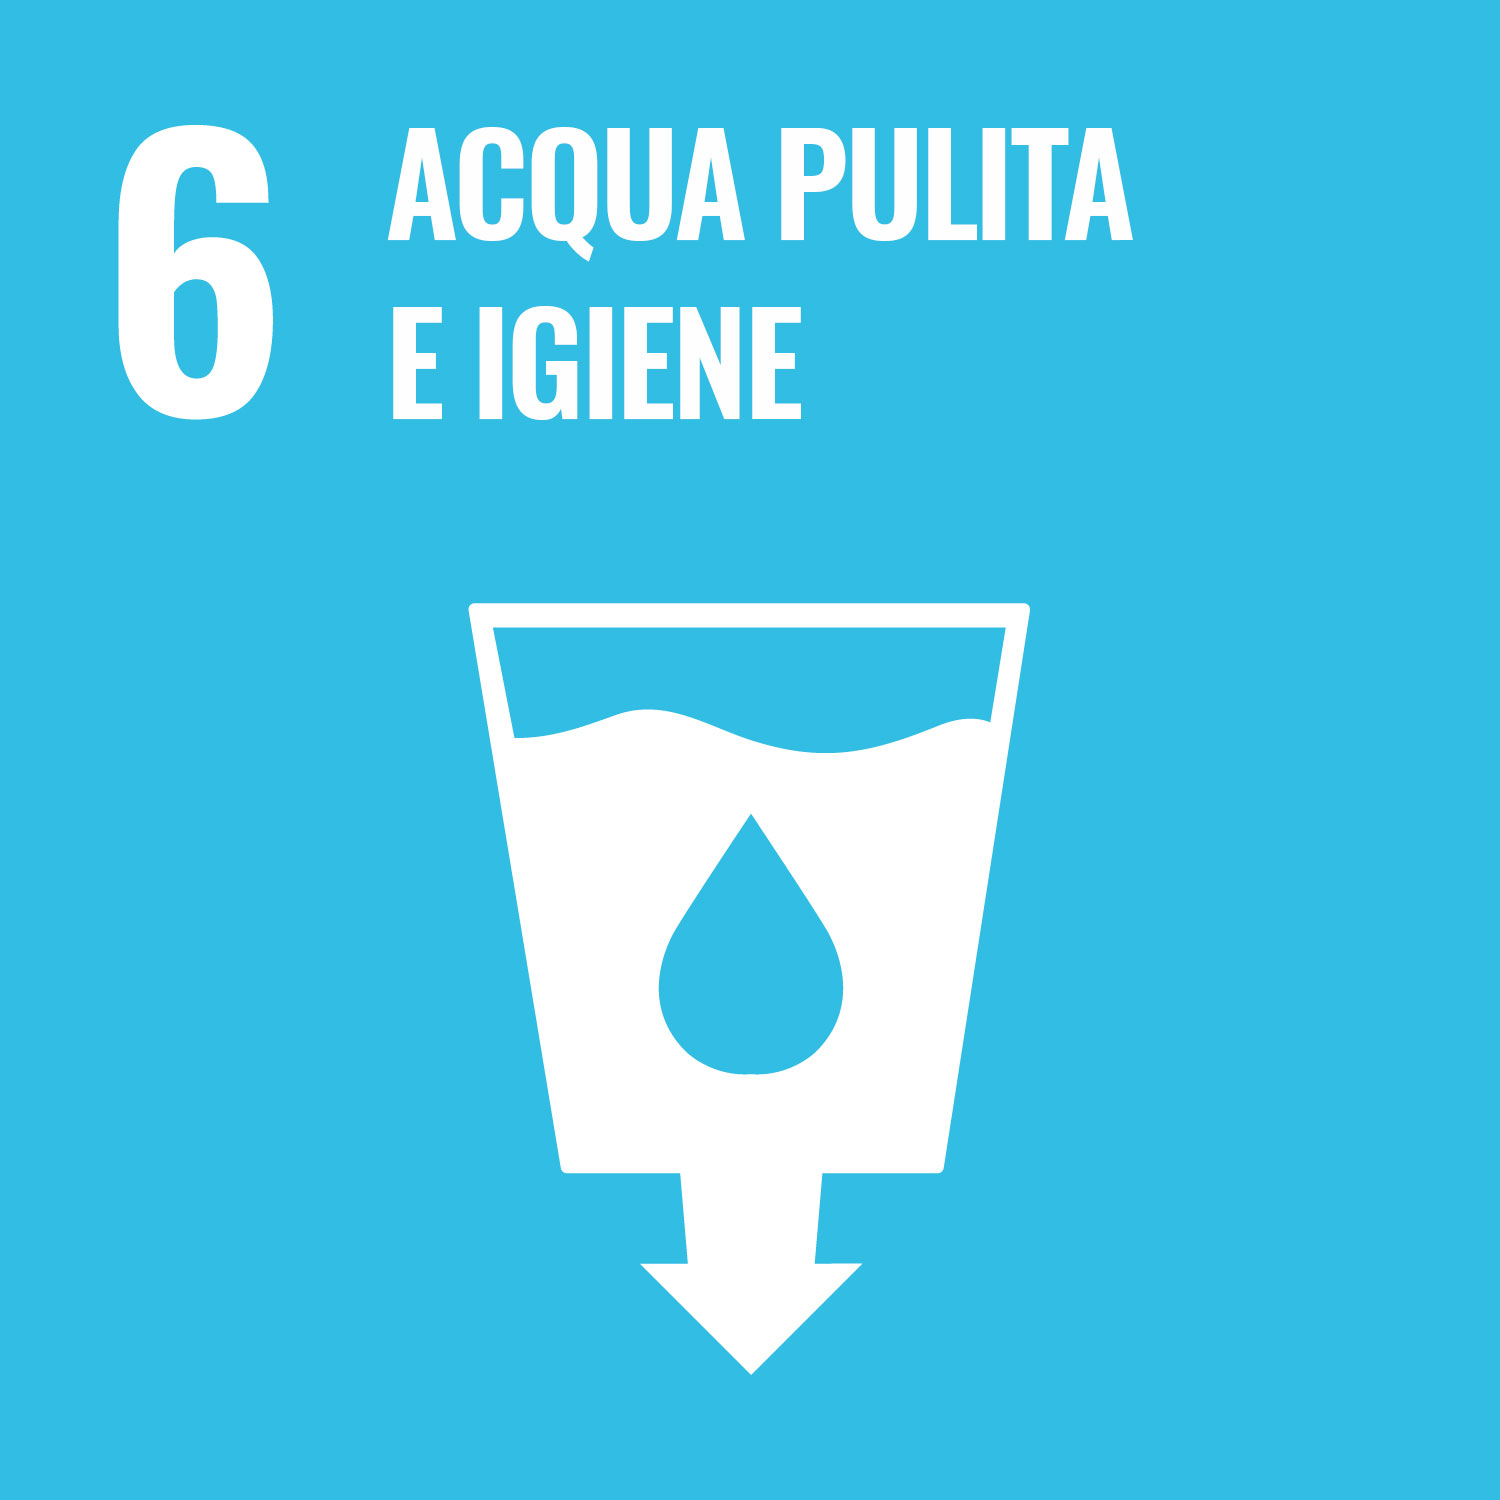 6. Acqua pulita e servizi igienico-sanitari